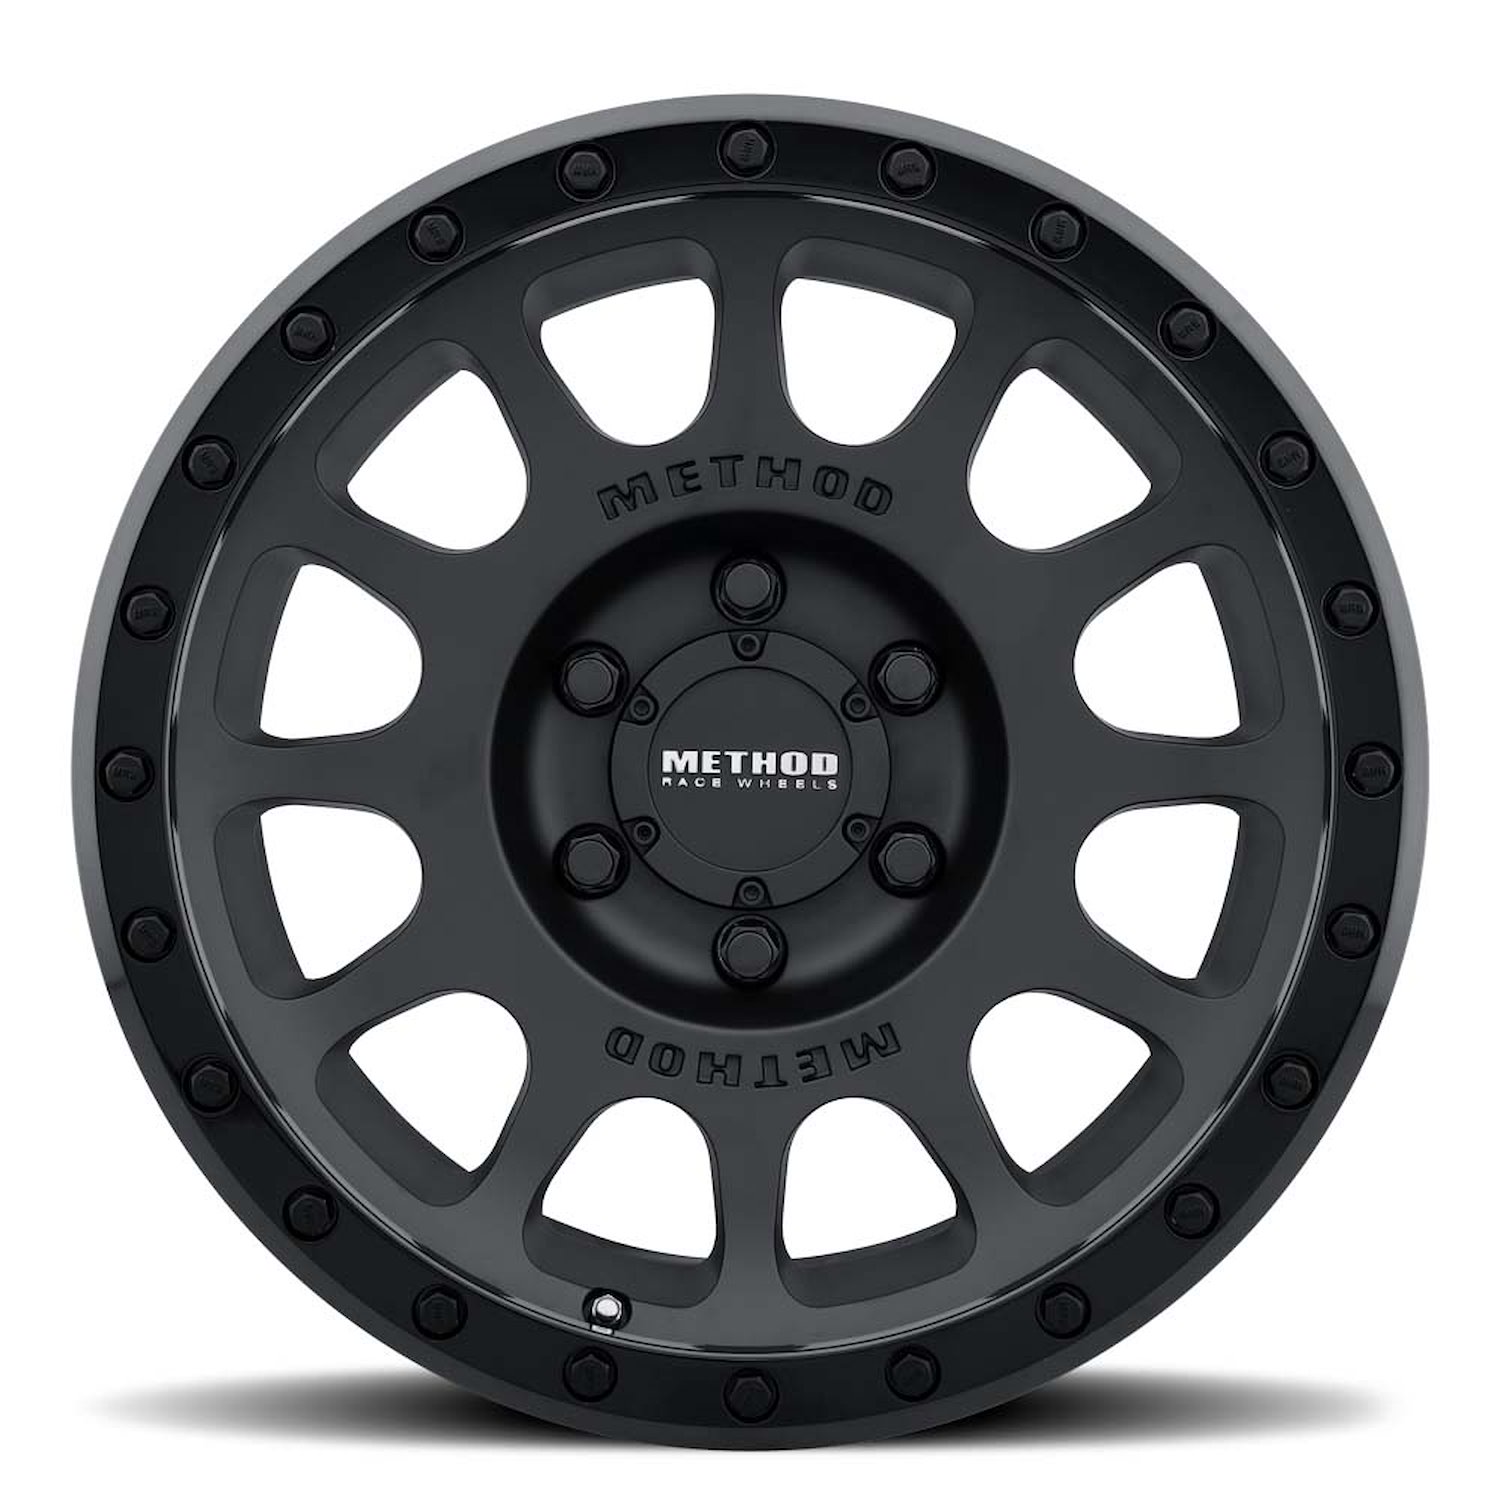 MR305785161000 STREET MR305 NV Wheel [Size: 17" x 8.5"] Matte Black w/ Gloss Black Lip